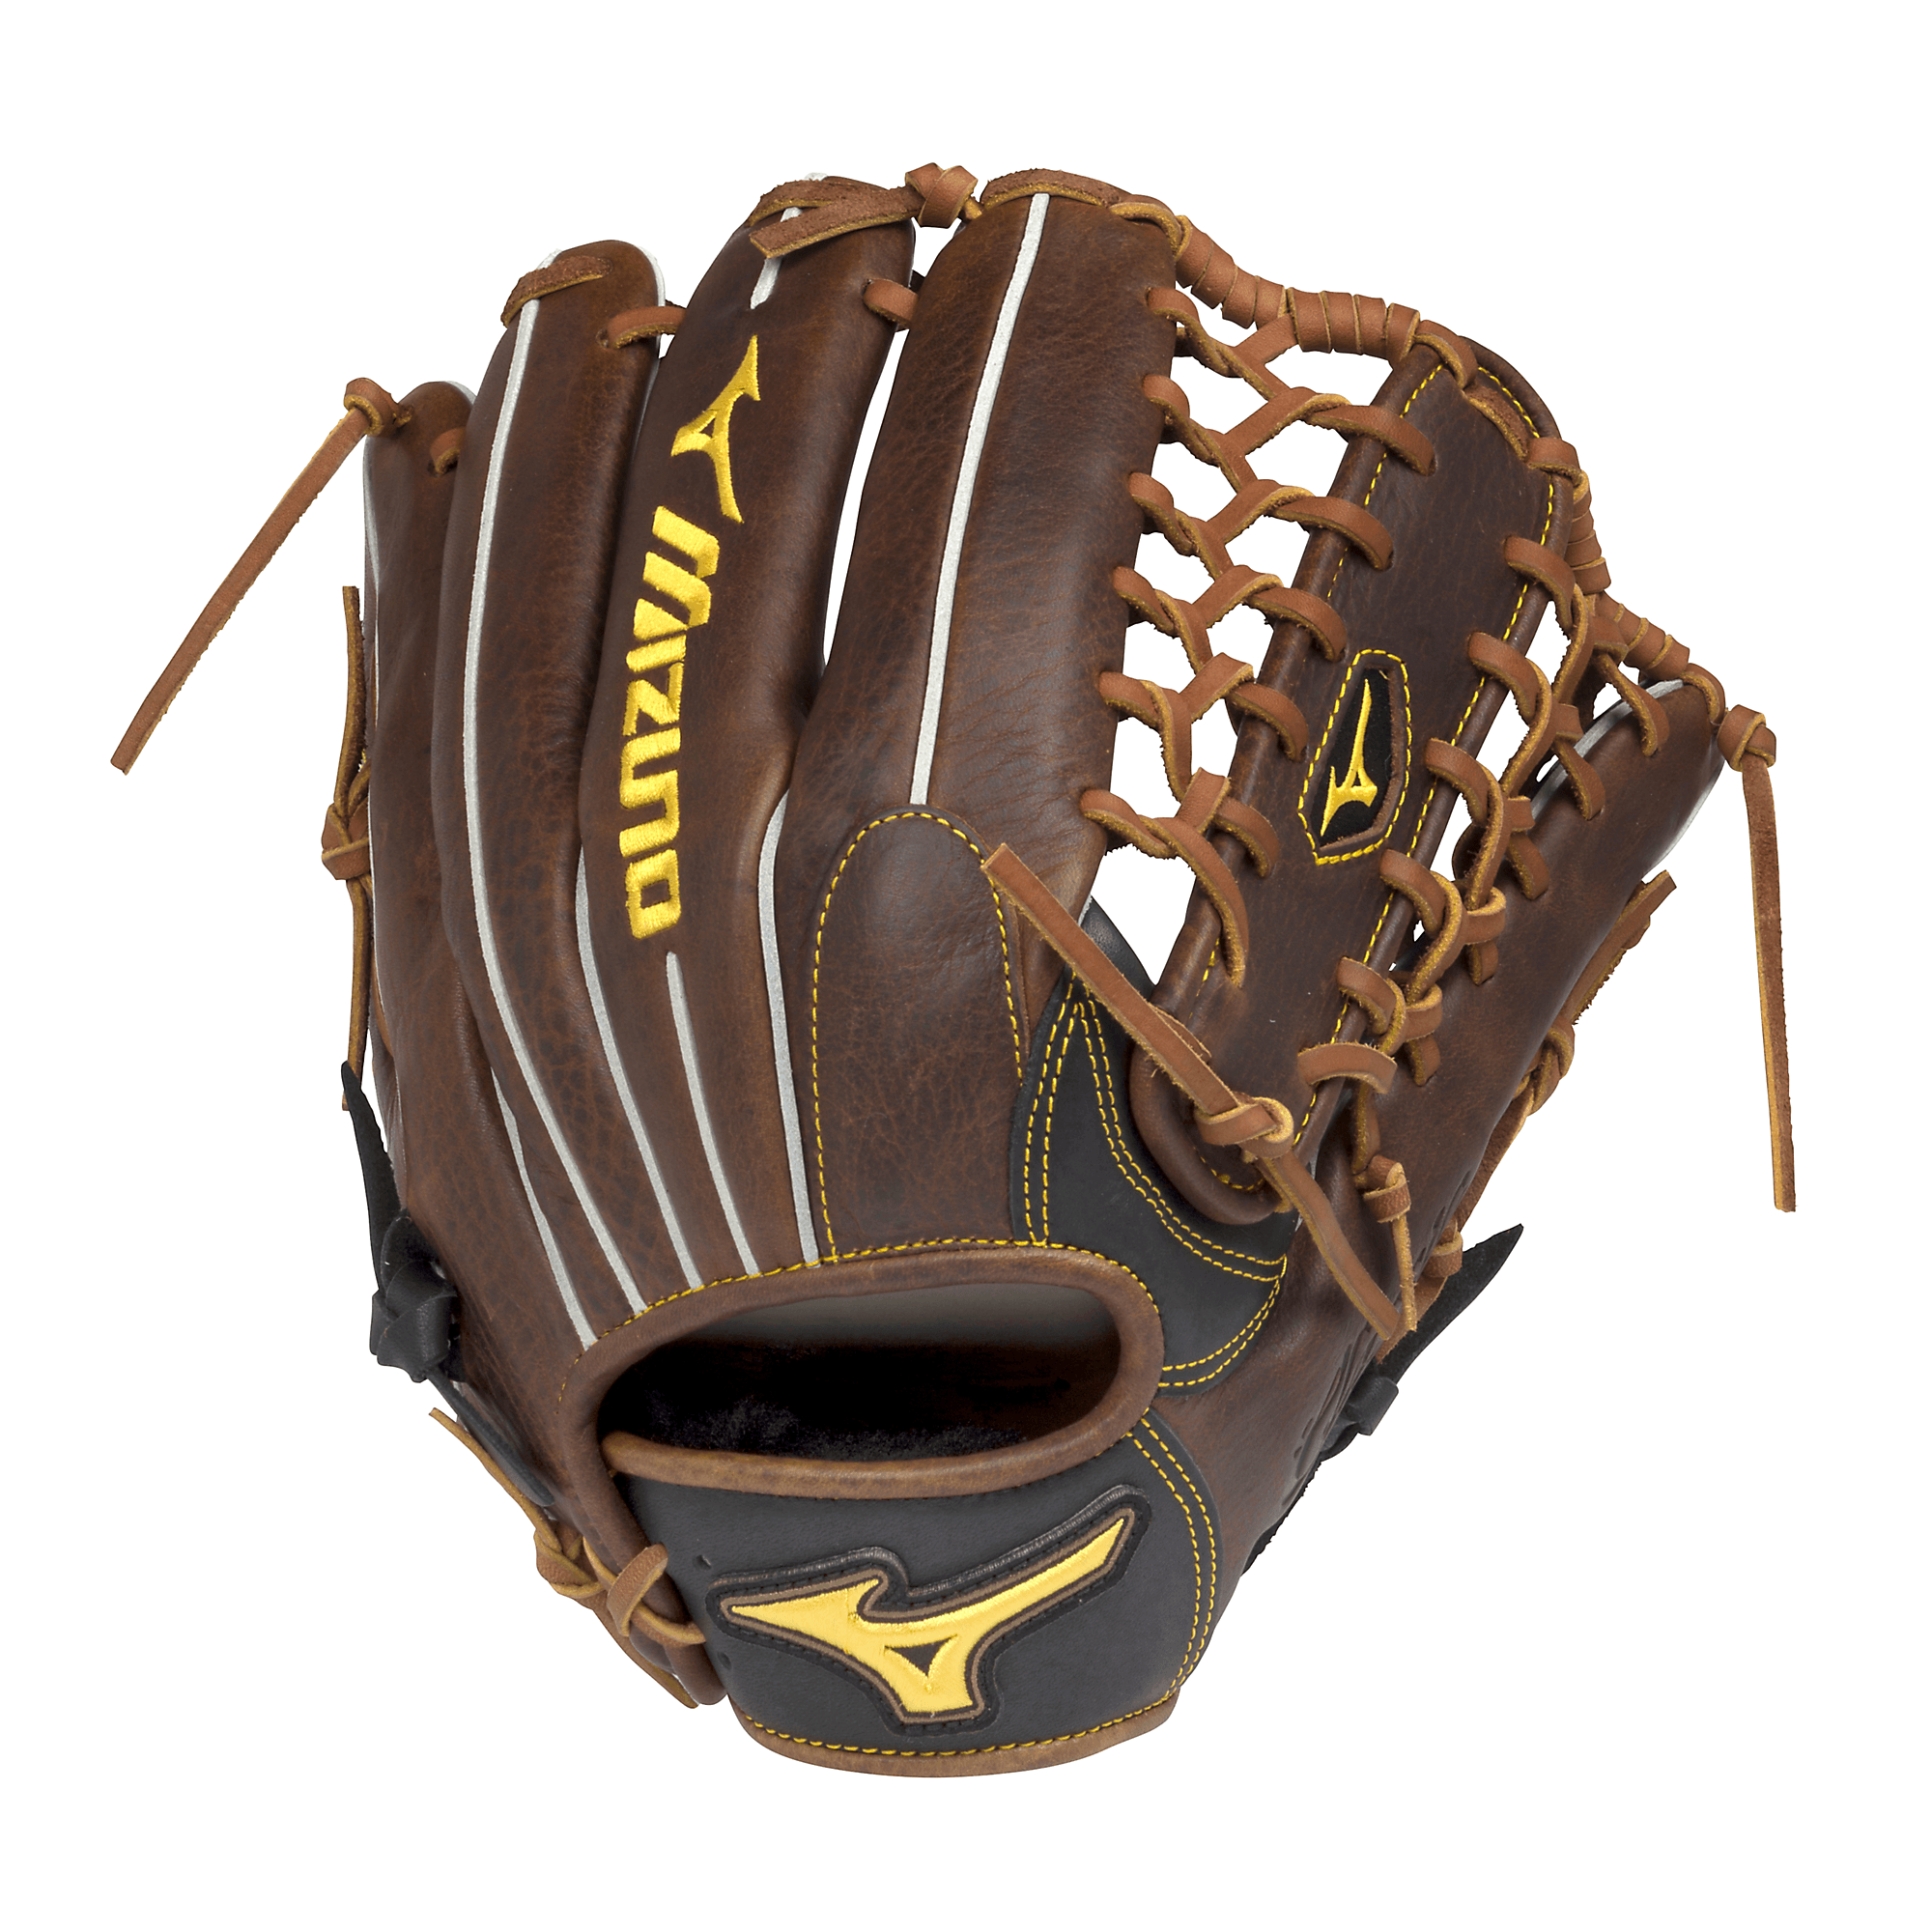 Baseball Glove Bat Logo - Baseball Gear & Equipment - Walmart.com